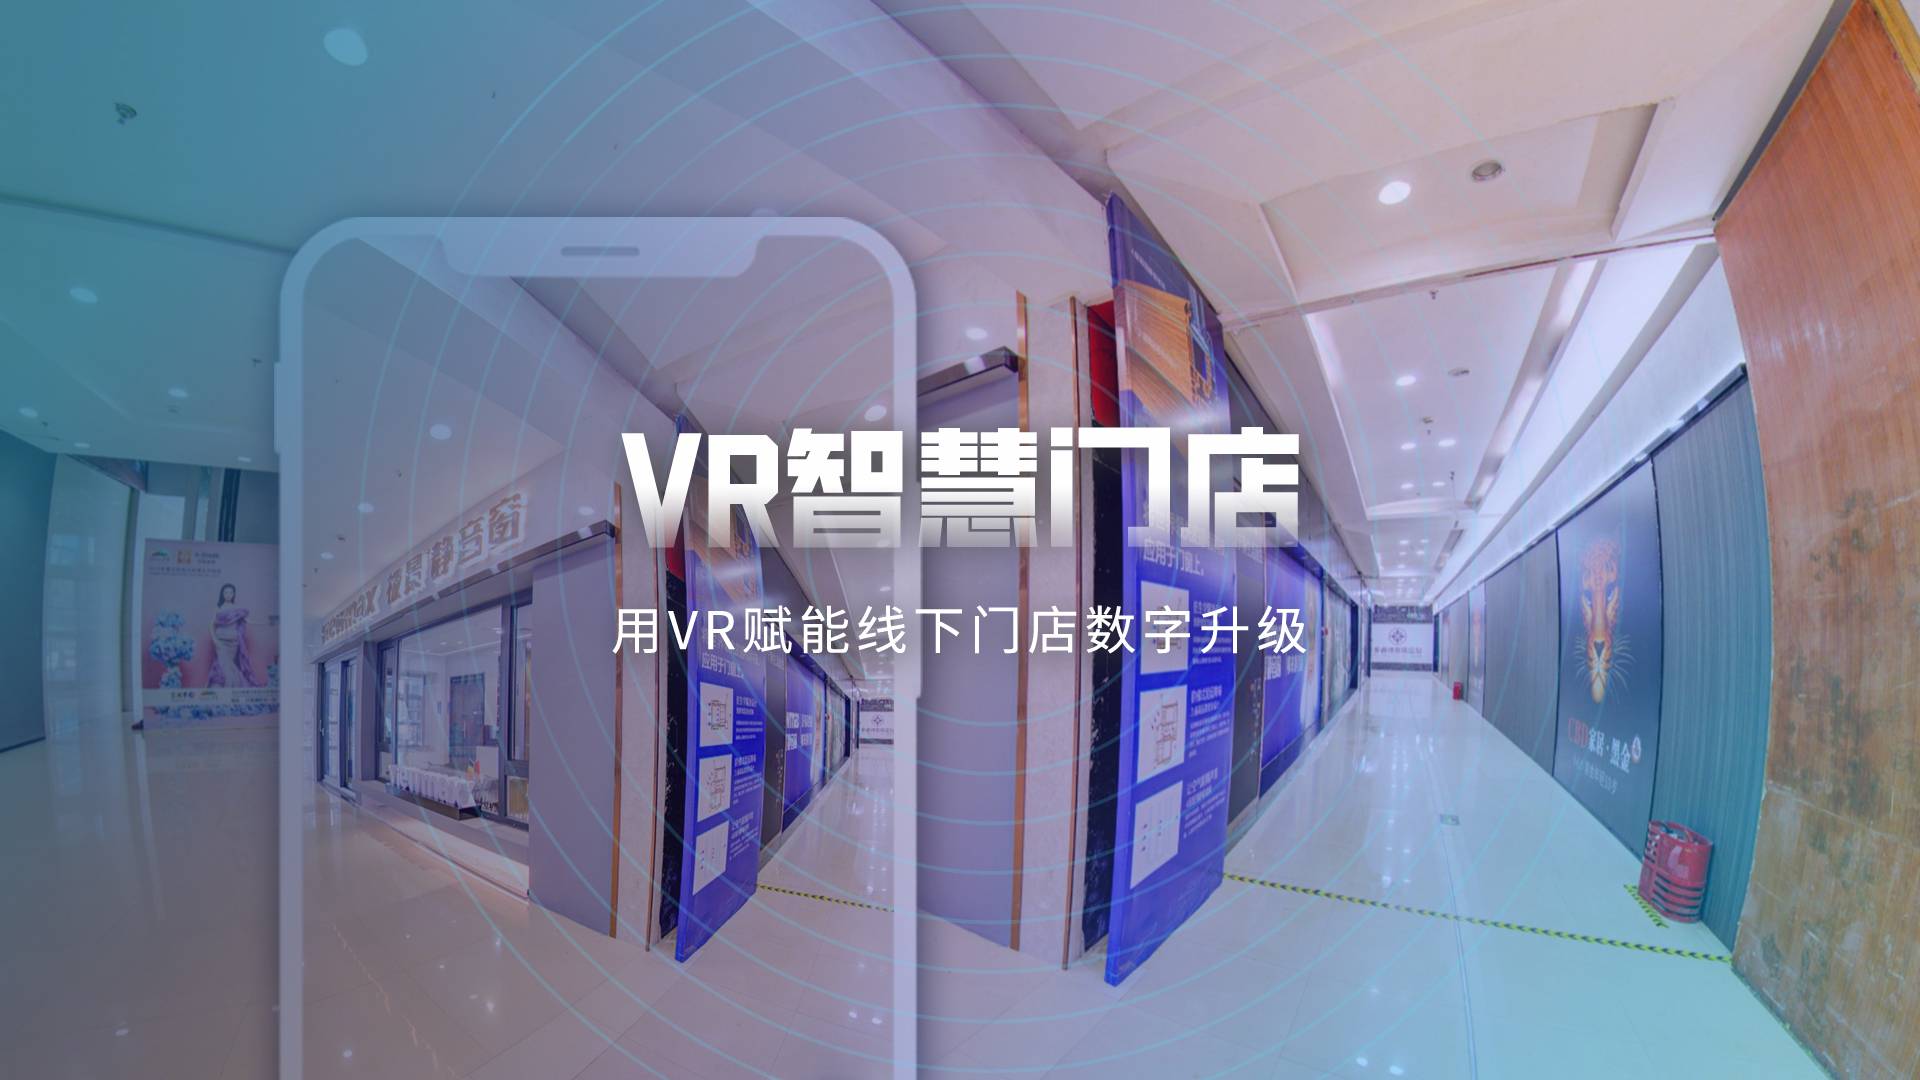 VR智慧门店，用VR全景技术革新零售行业